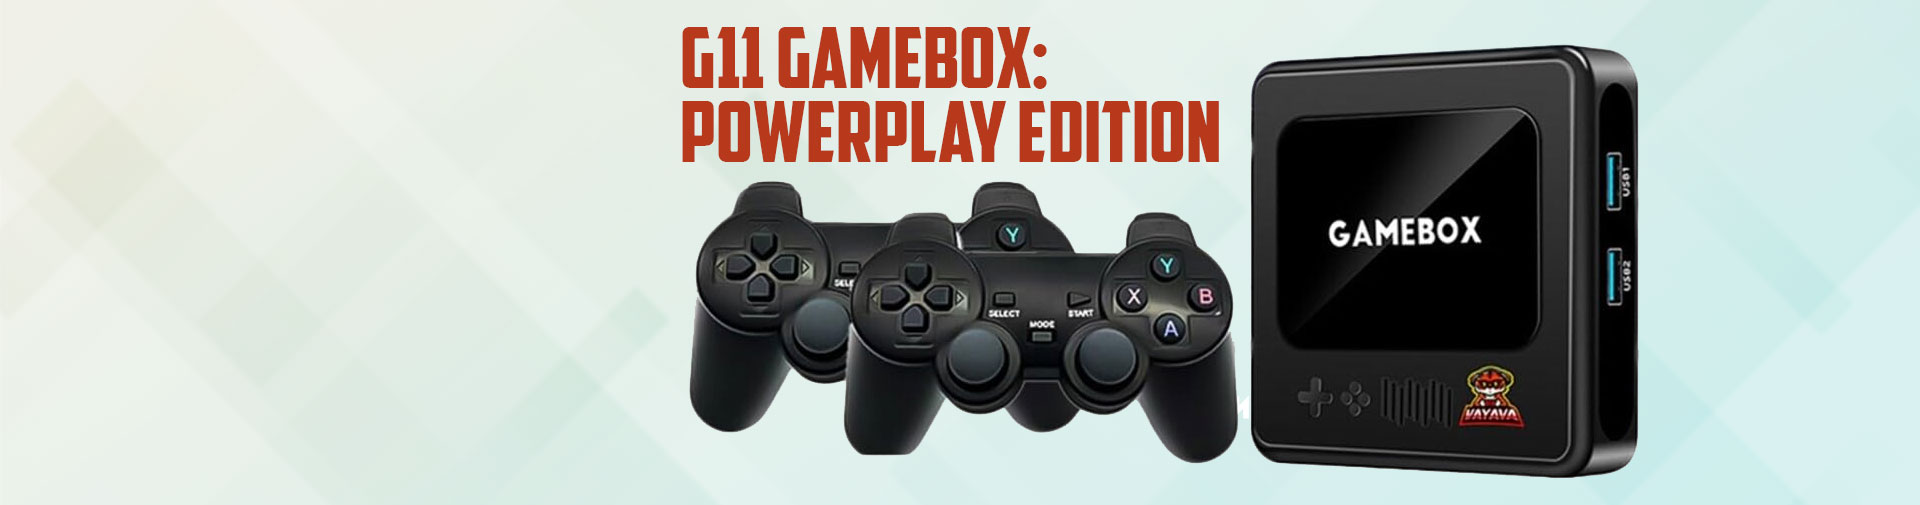 G11-Gamebox